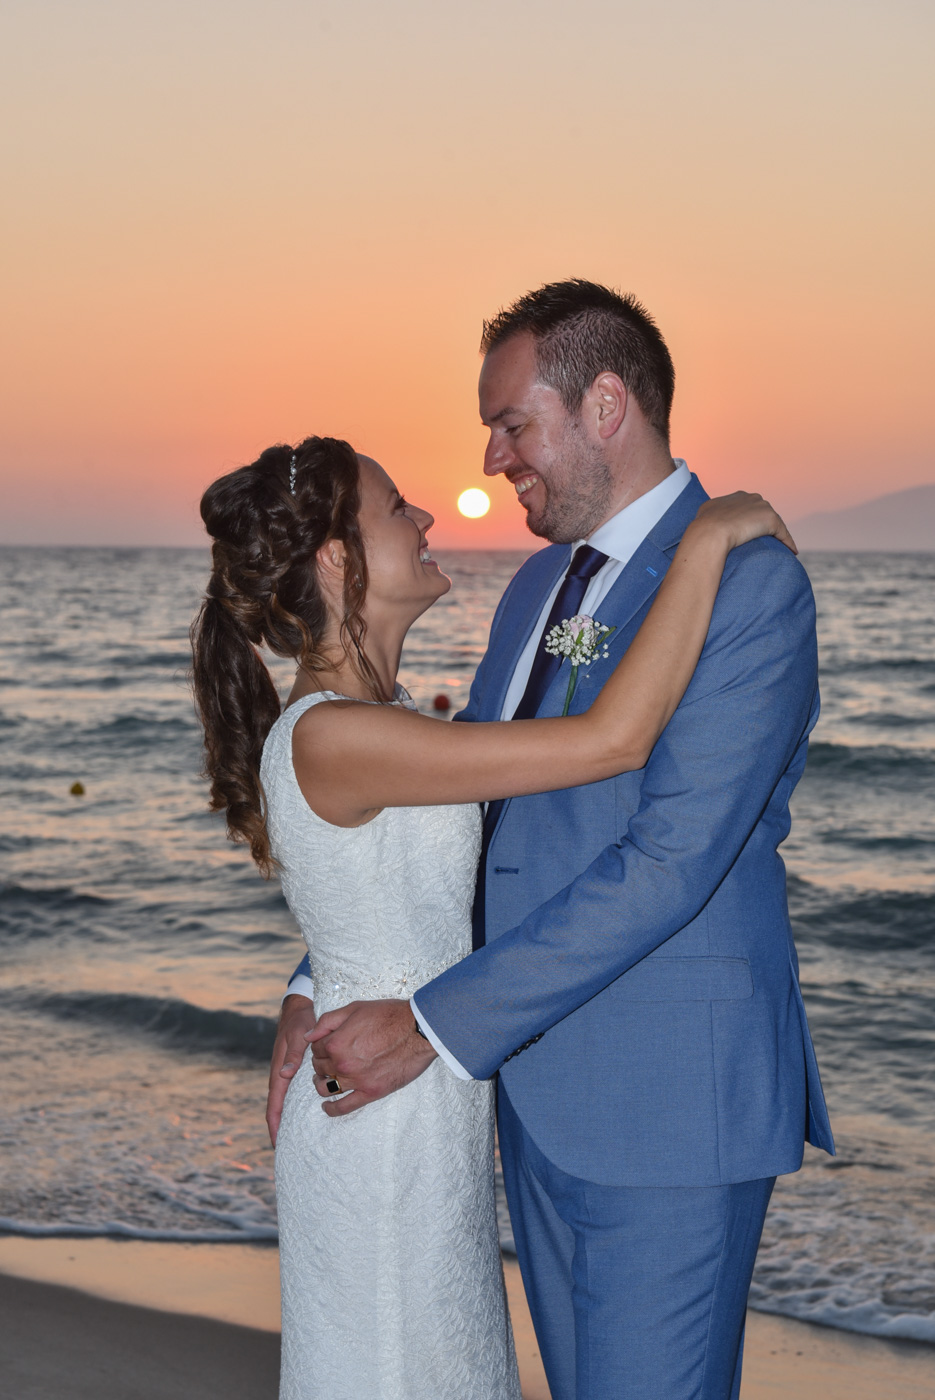 Perfect wedding in Greece and Greek island